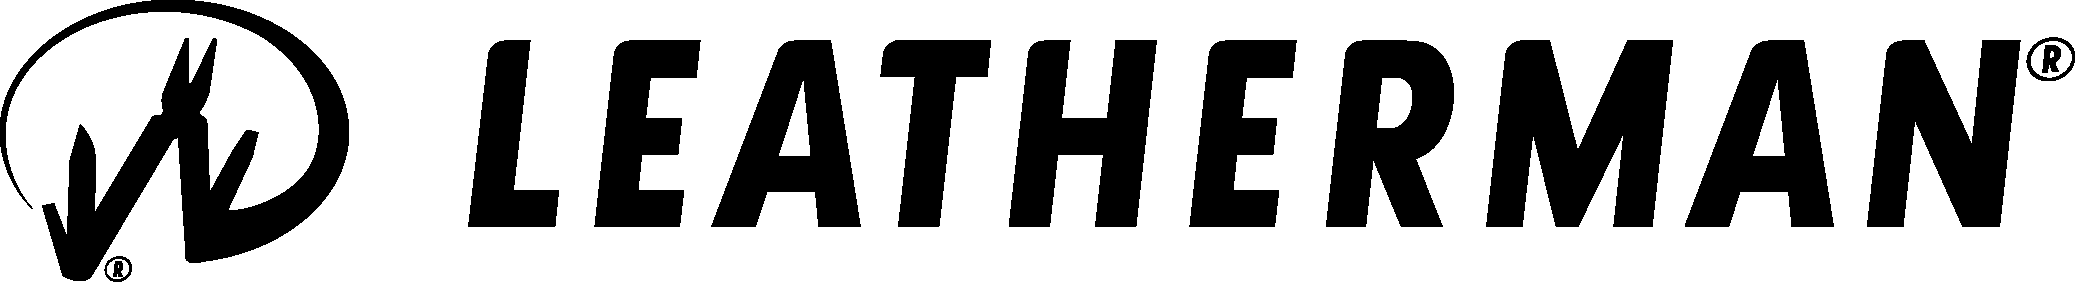 Leatherman Logo big